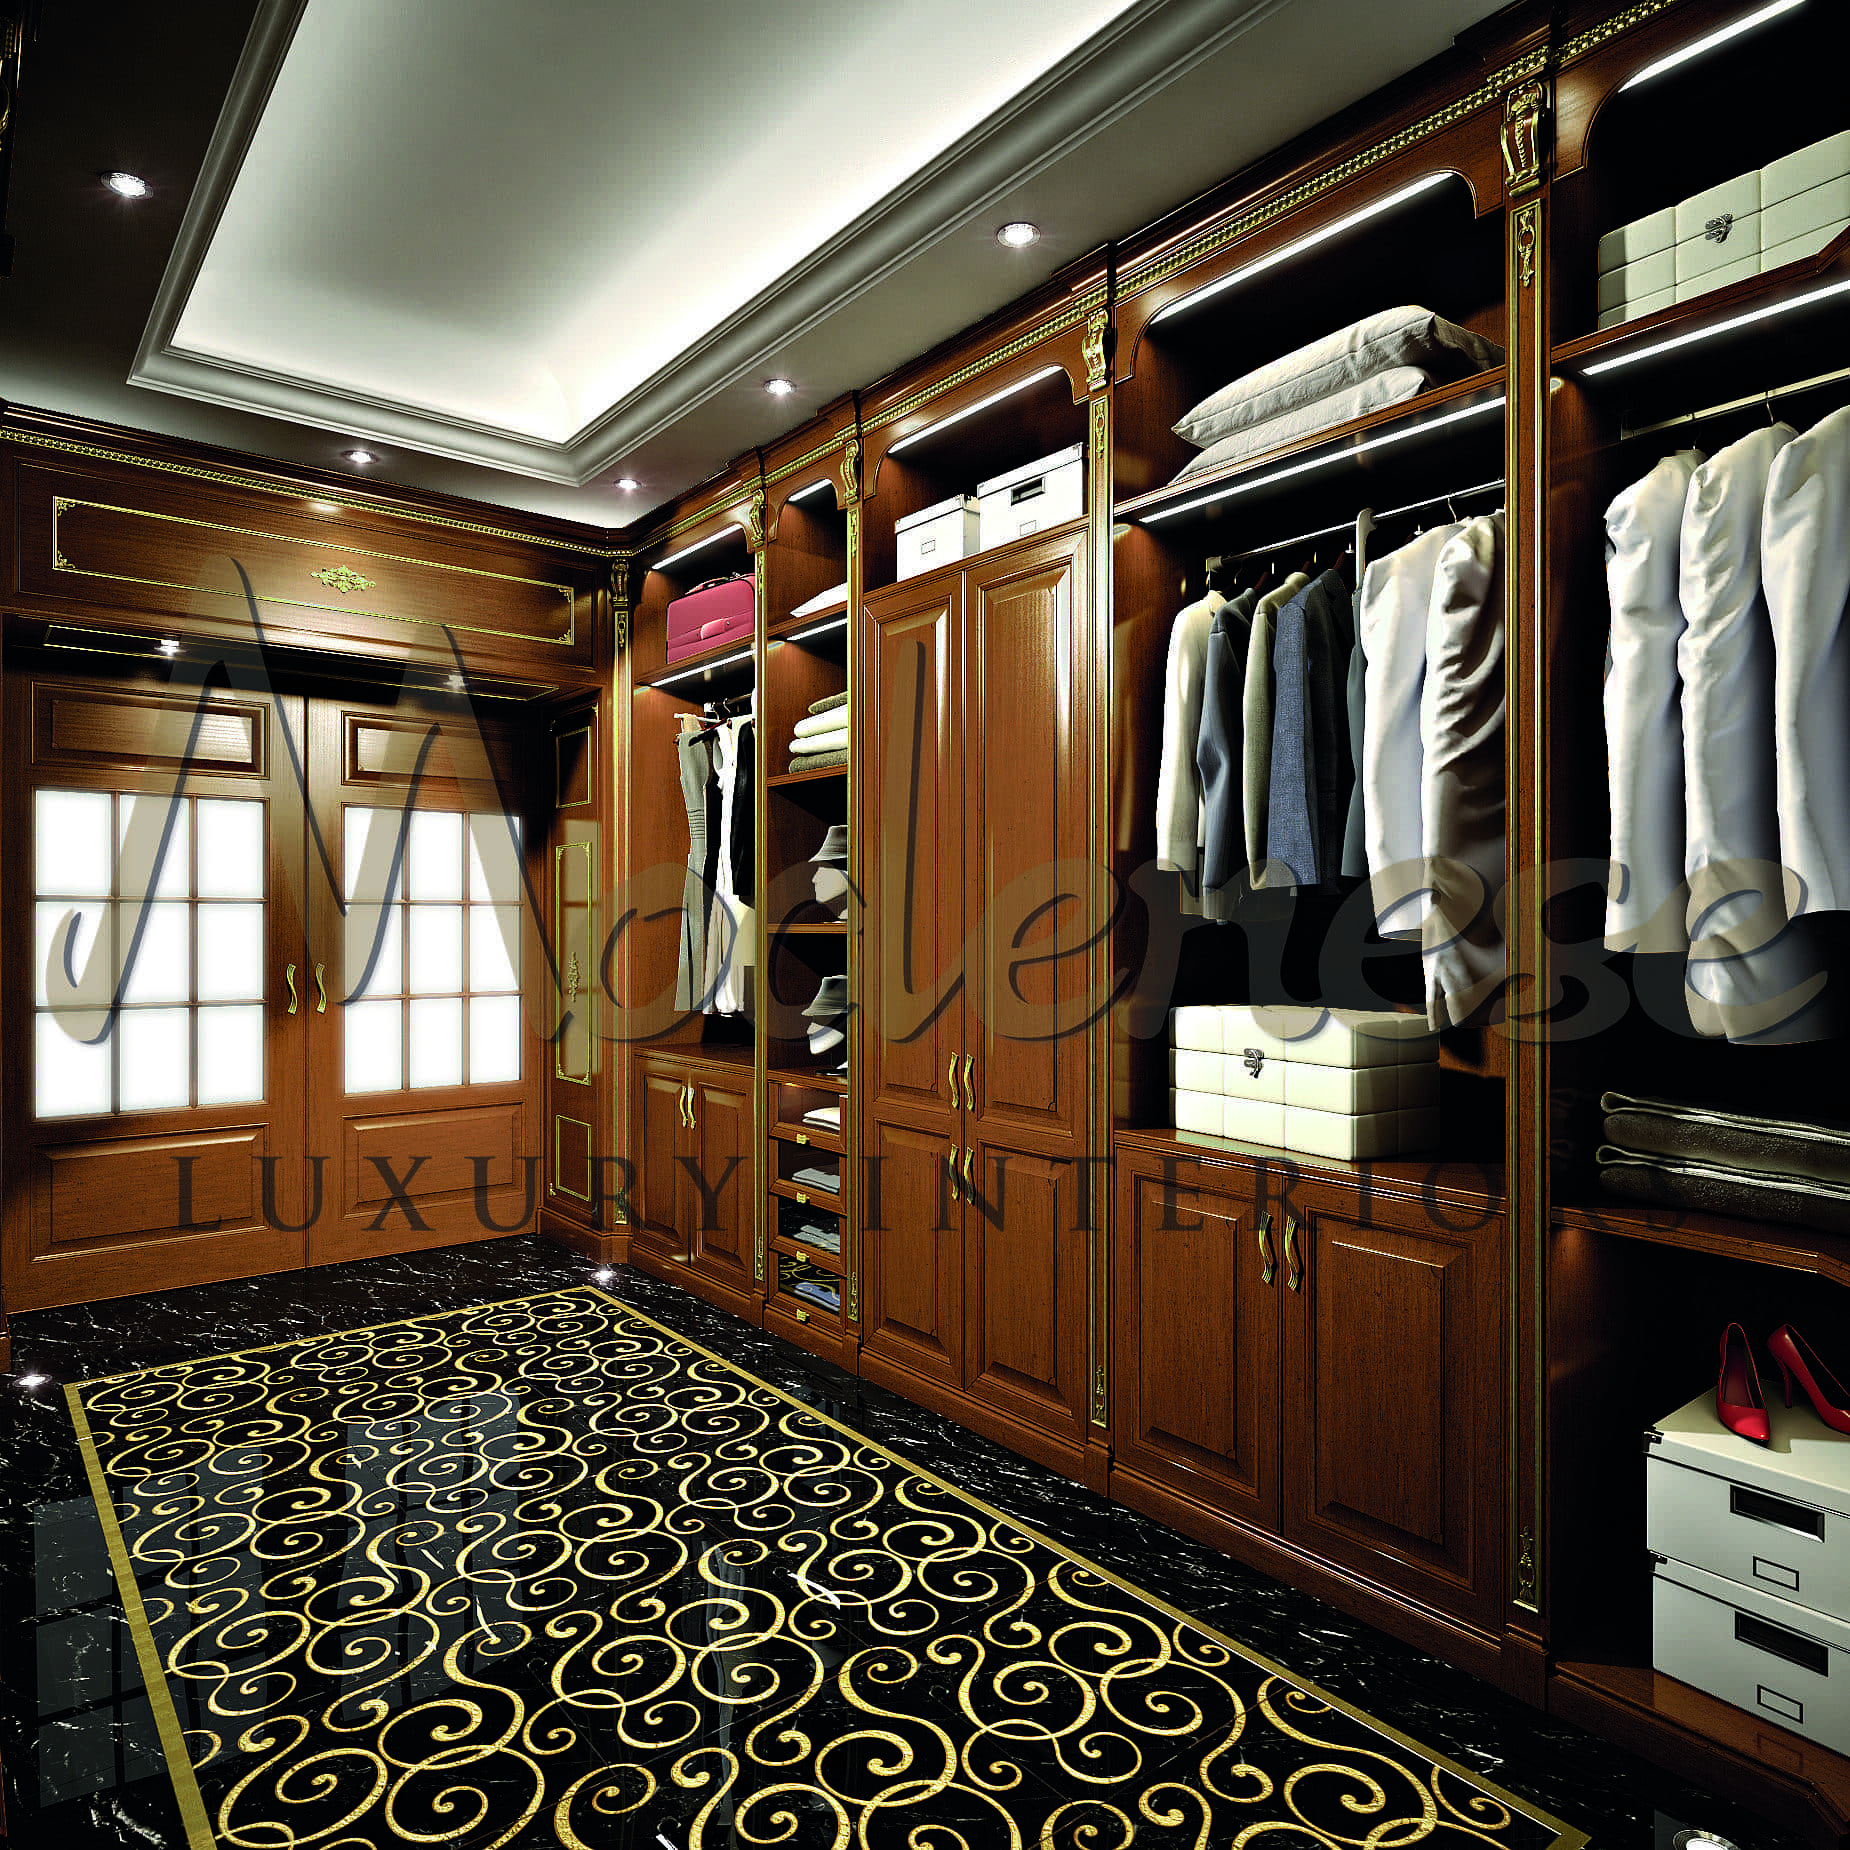 Luxury Walk In Closet Organization - Best Design Idea